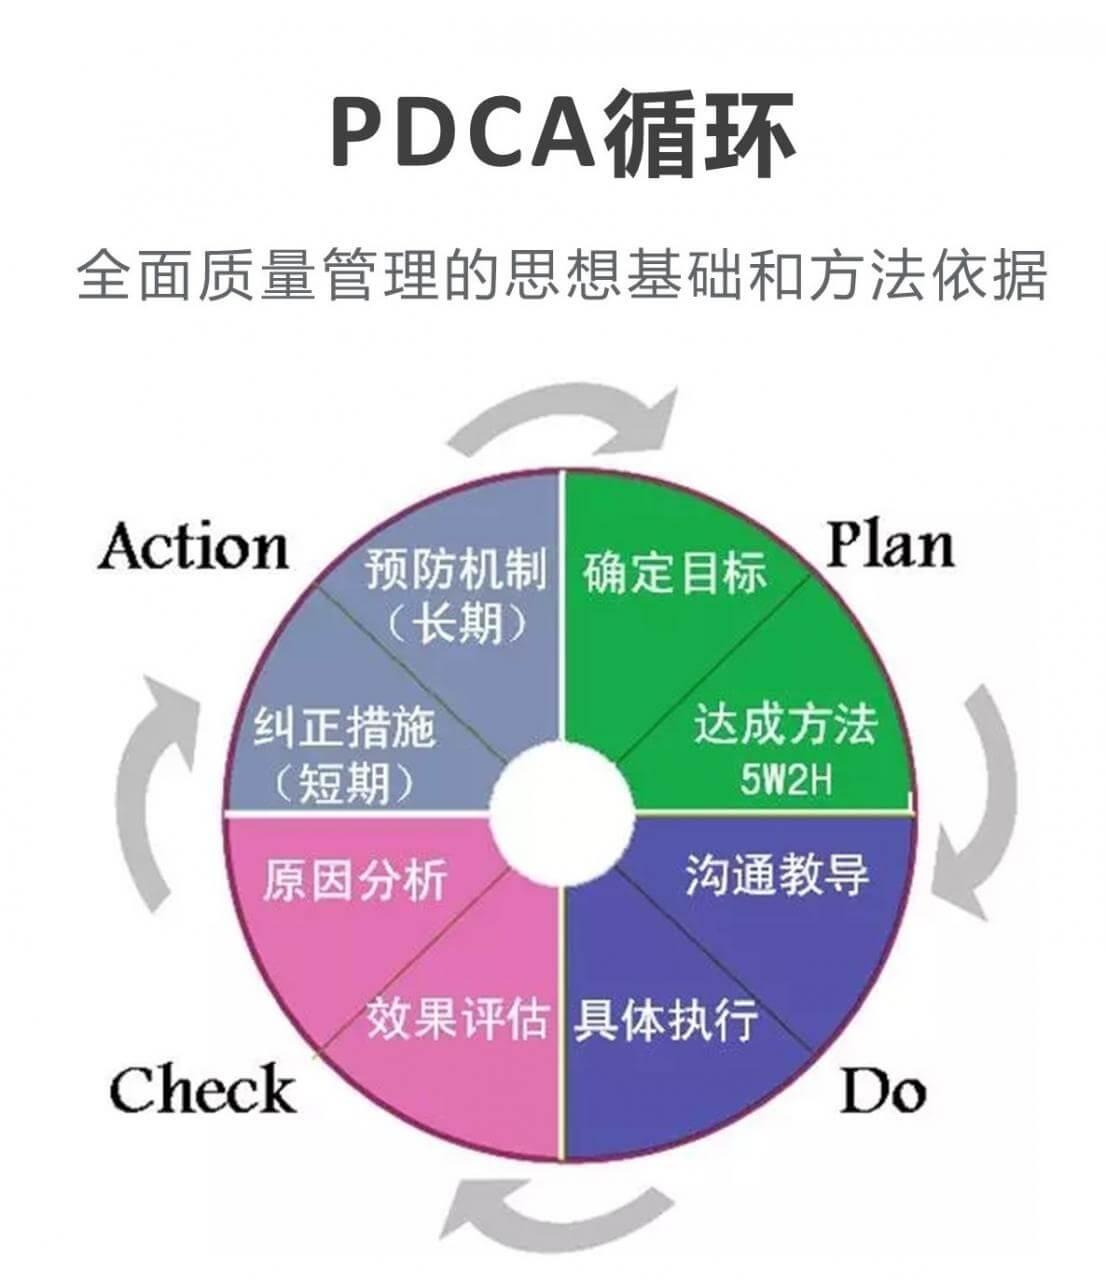 pdca简单案例 范文图片